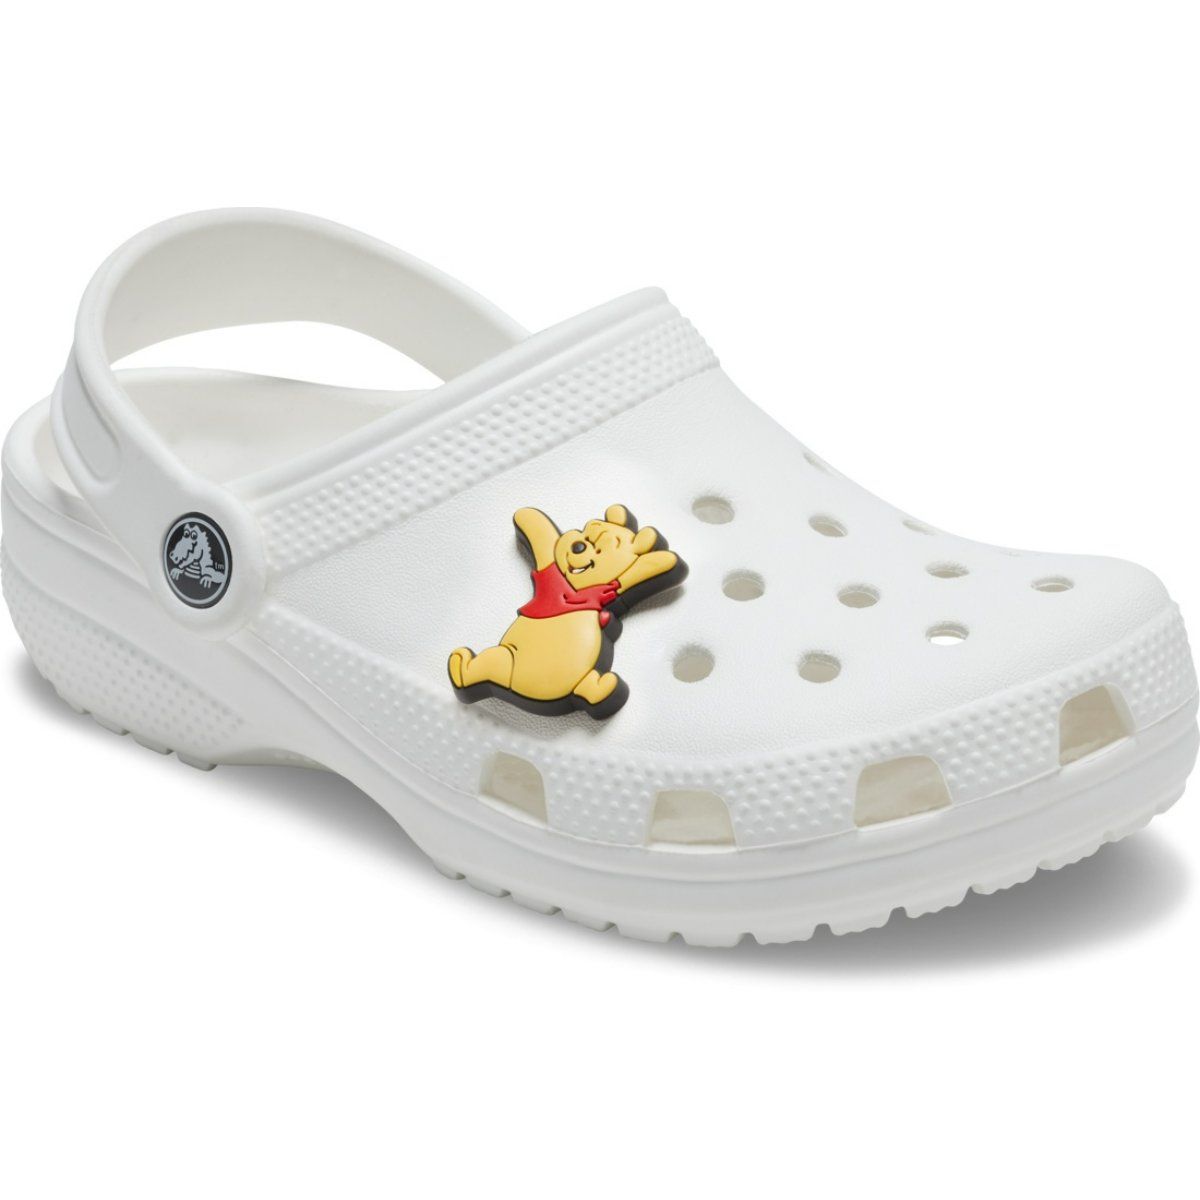 Crocs Winnie The Pooh Jibbitz Shoe Charm: Buy Crocs Winnie The Pooh ...